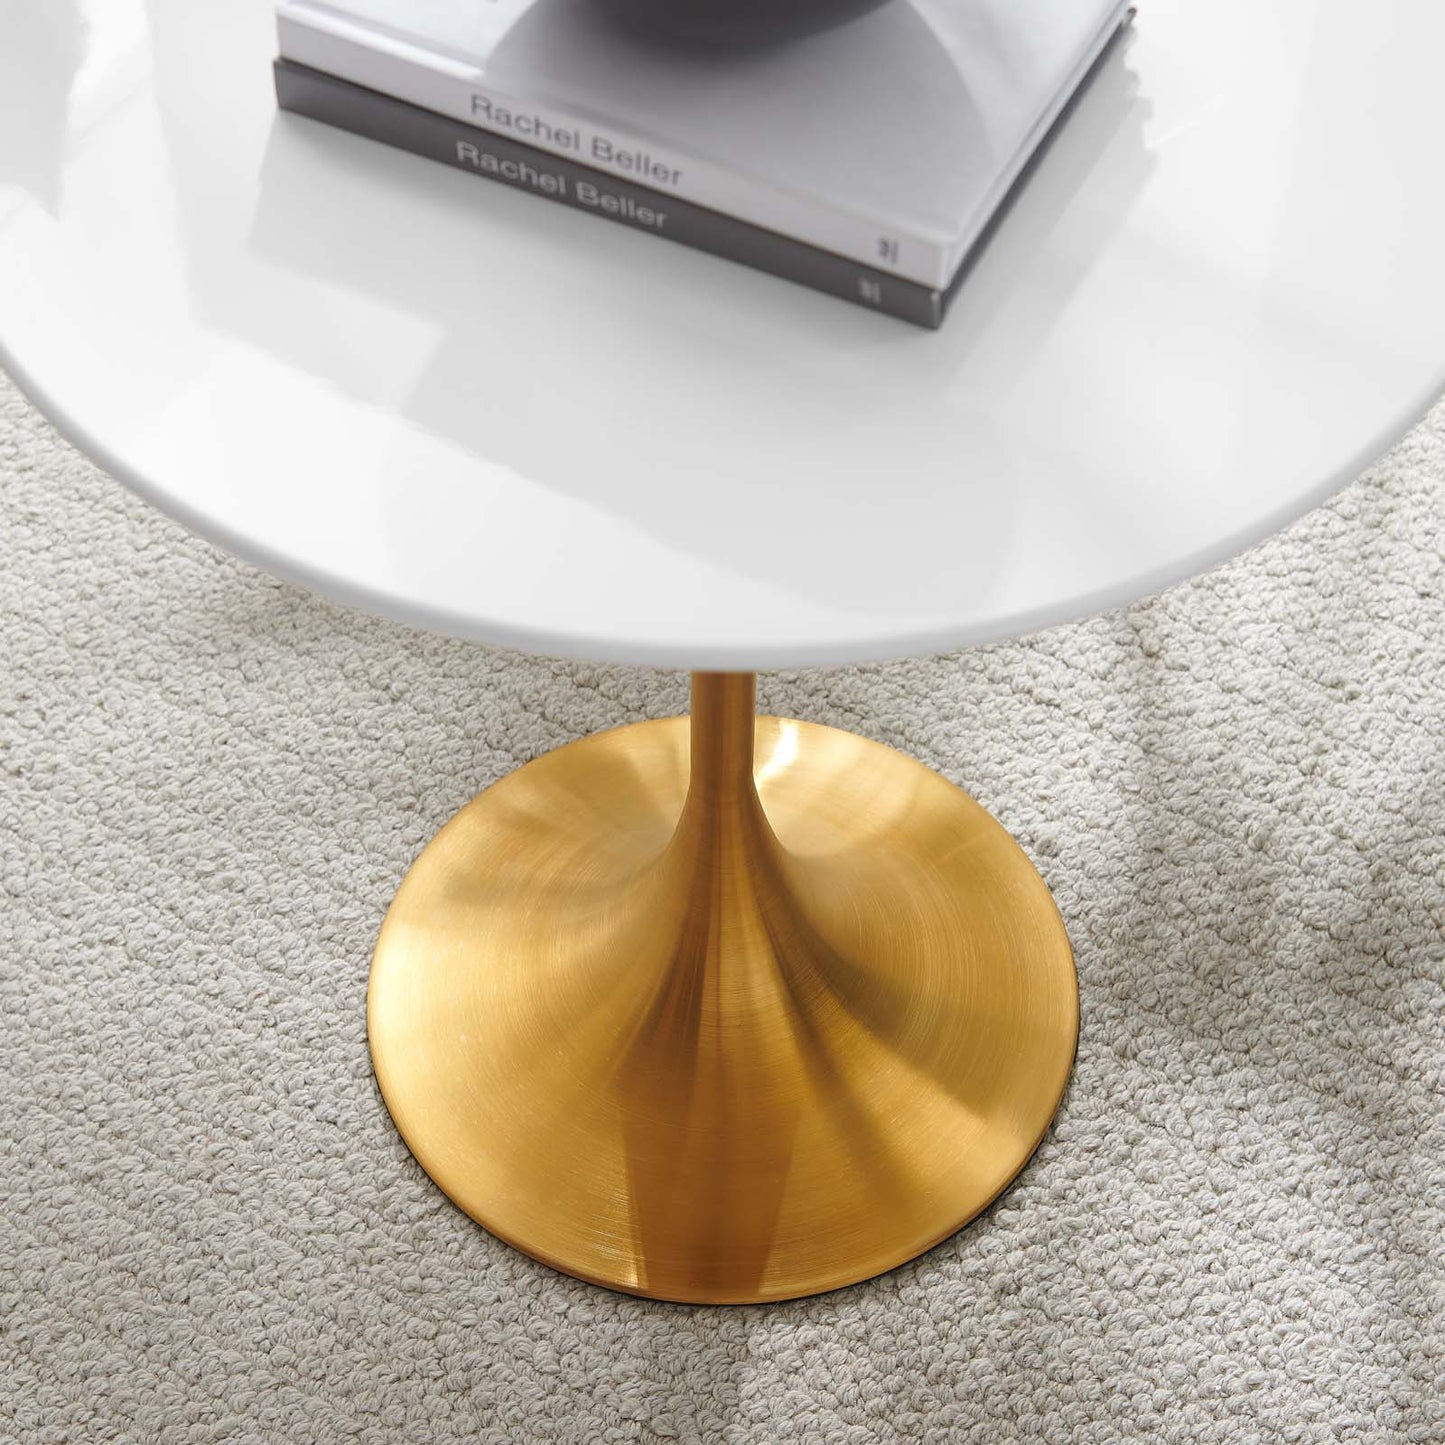 Tulip Style 20" Round Side Table - White & Gold Base